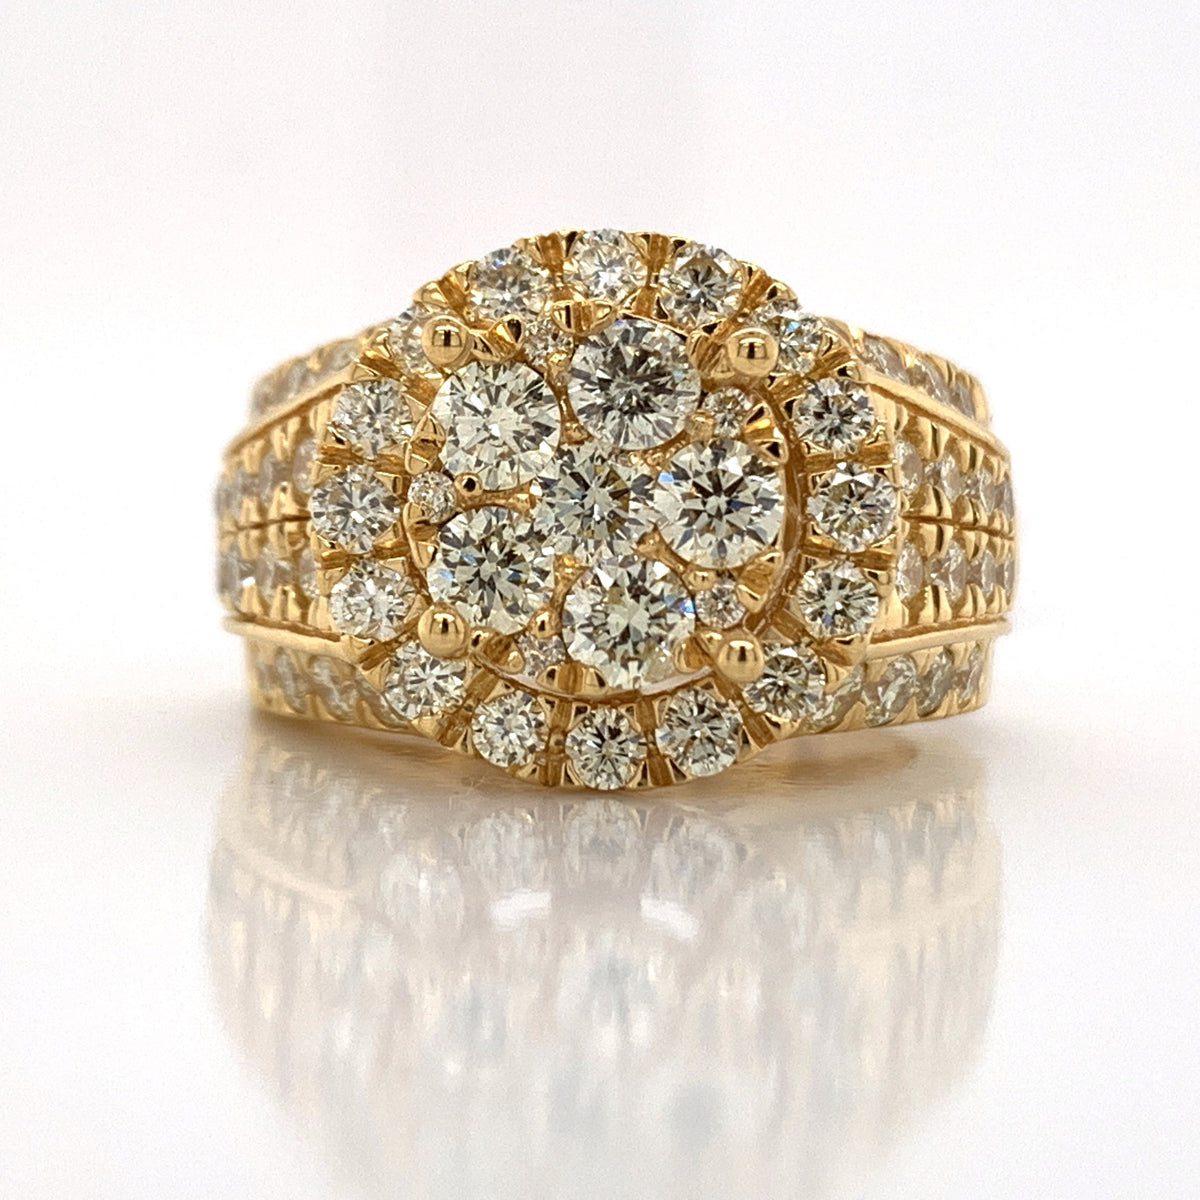 2.72 CT. Diamond Ring in 10K Gold - White Carat Diamonds 